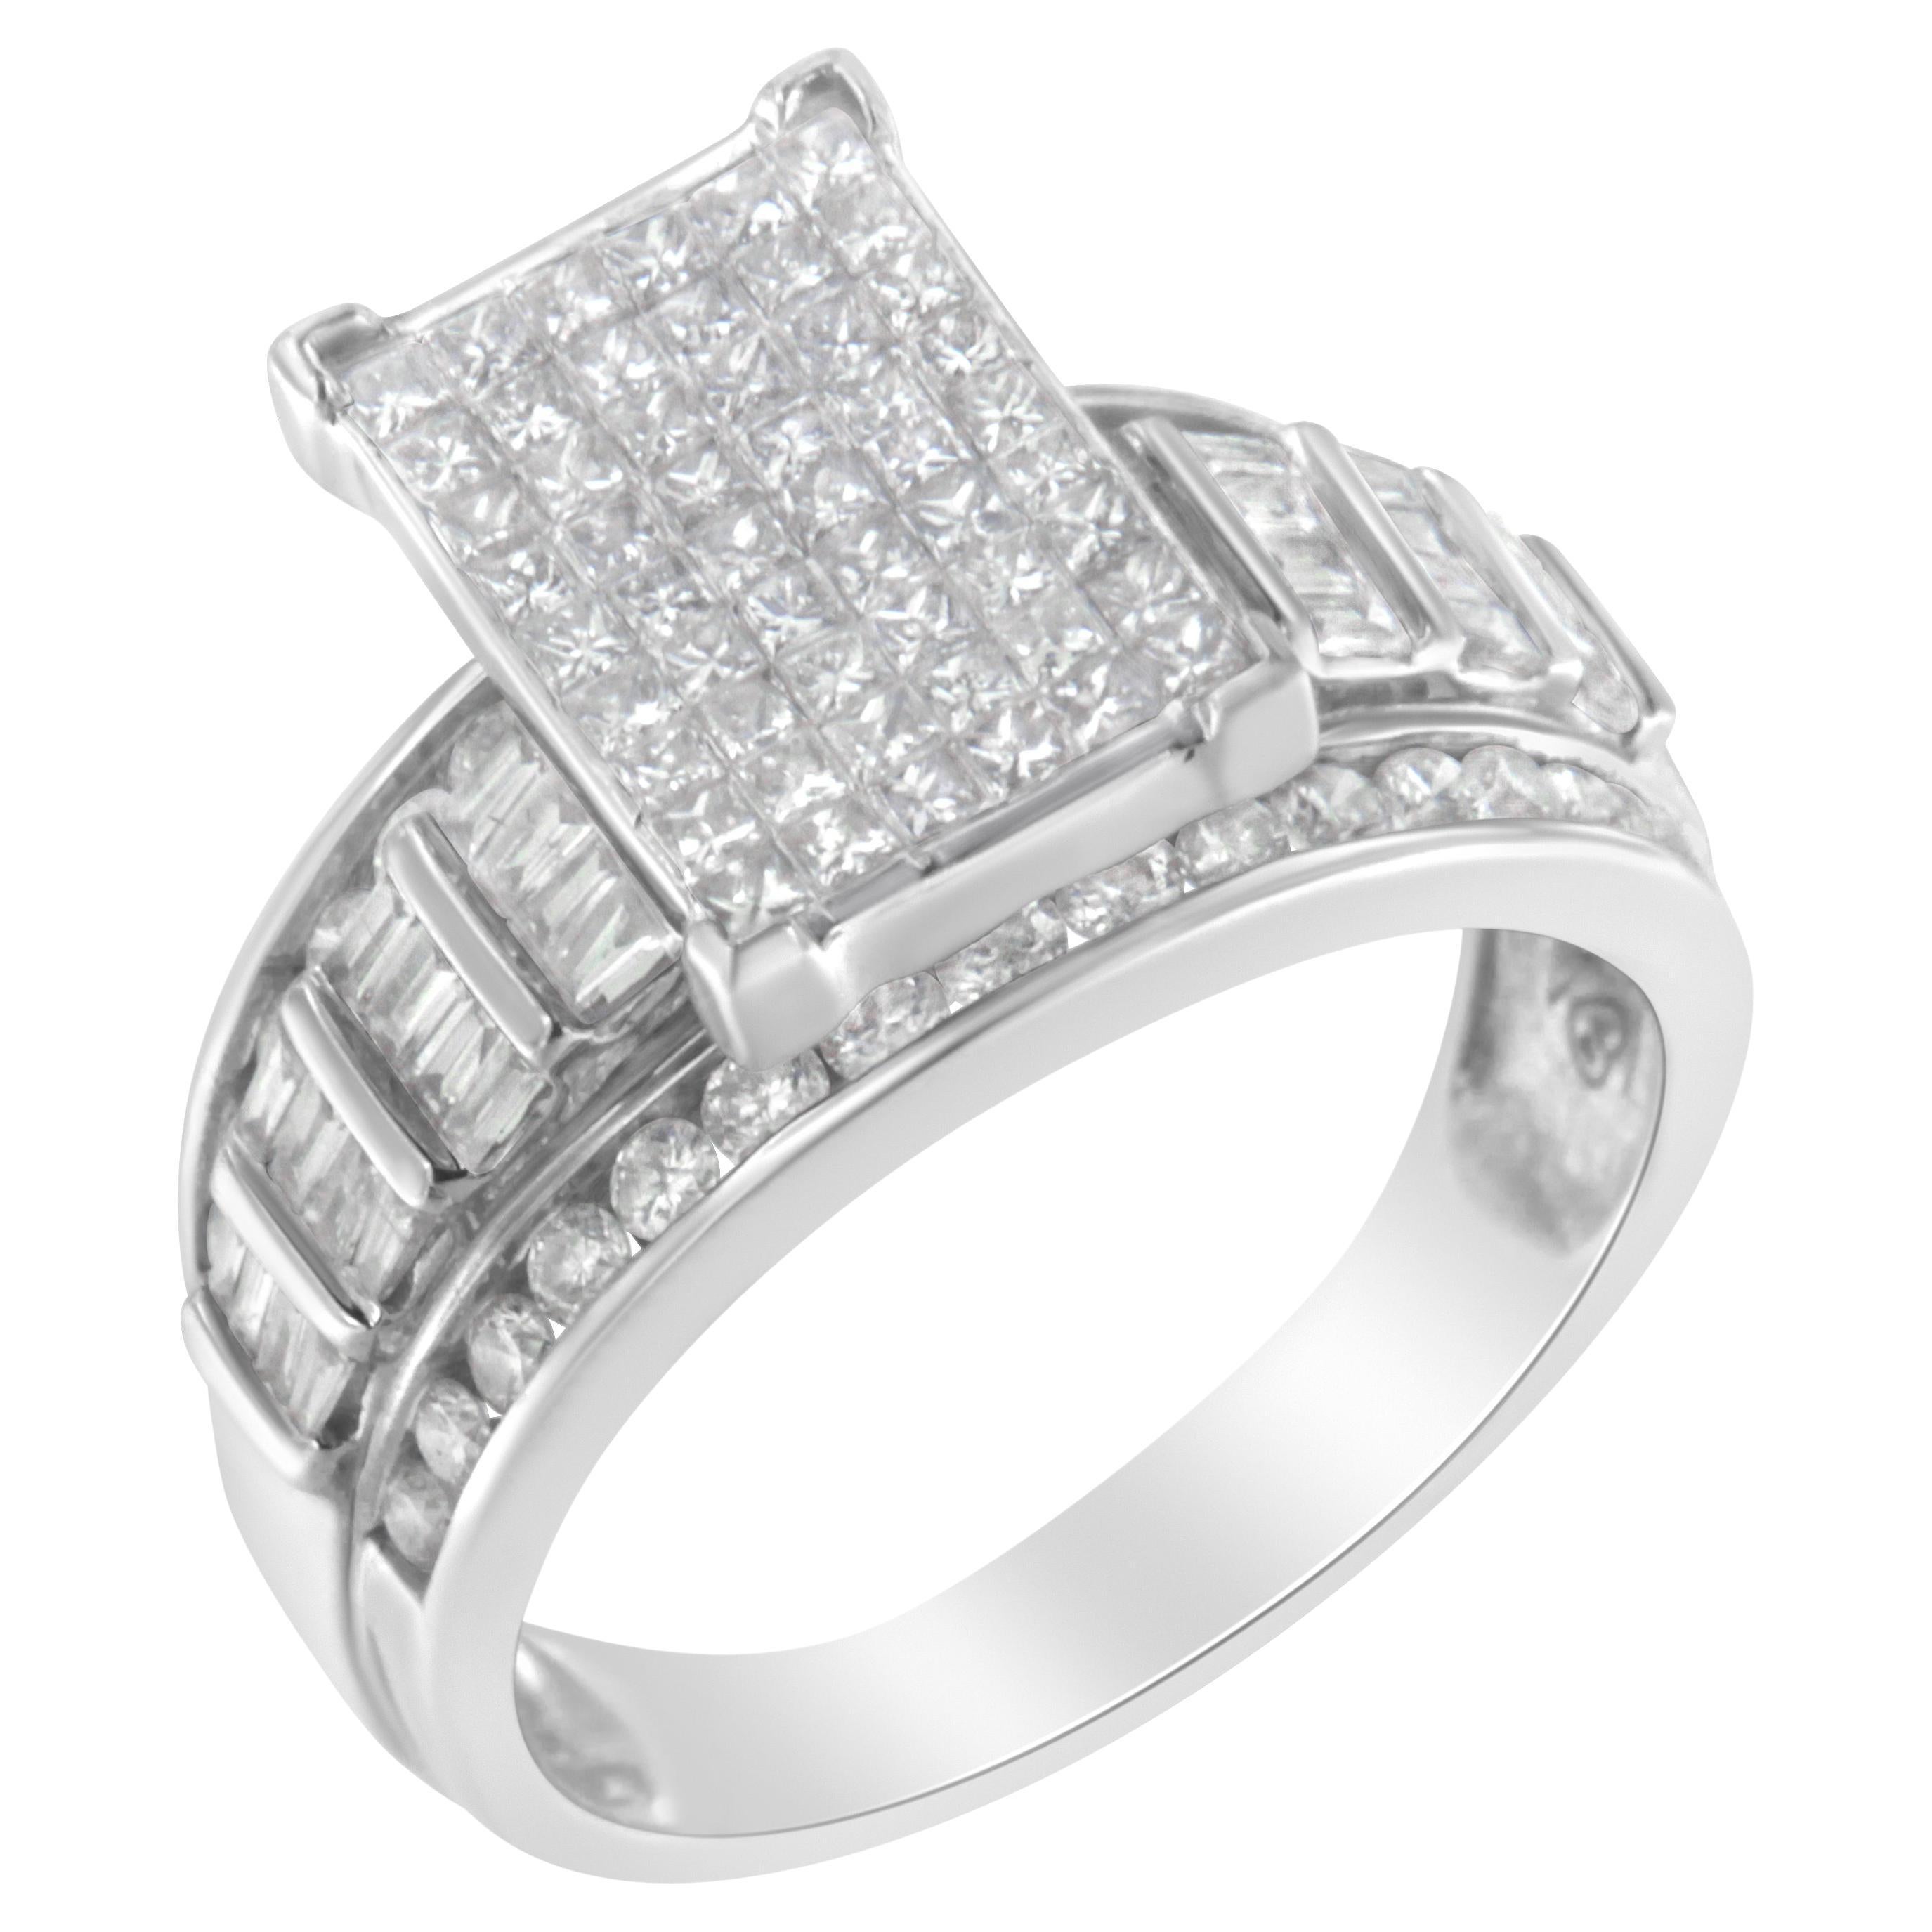 For Sale:  14K White Gold 2.00 Carat Diamond Composite Ring